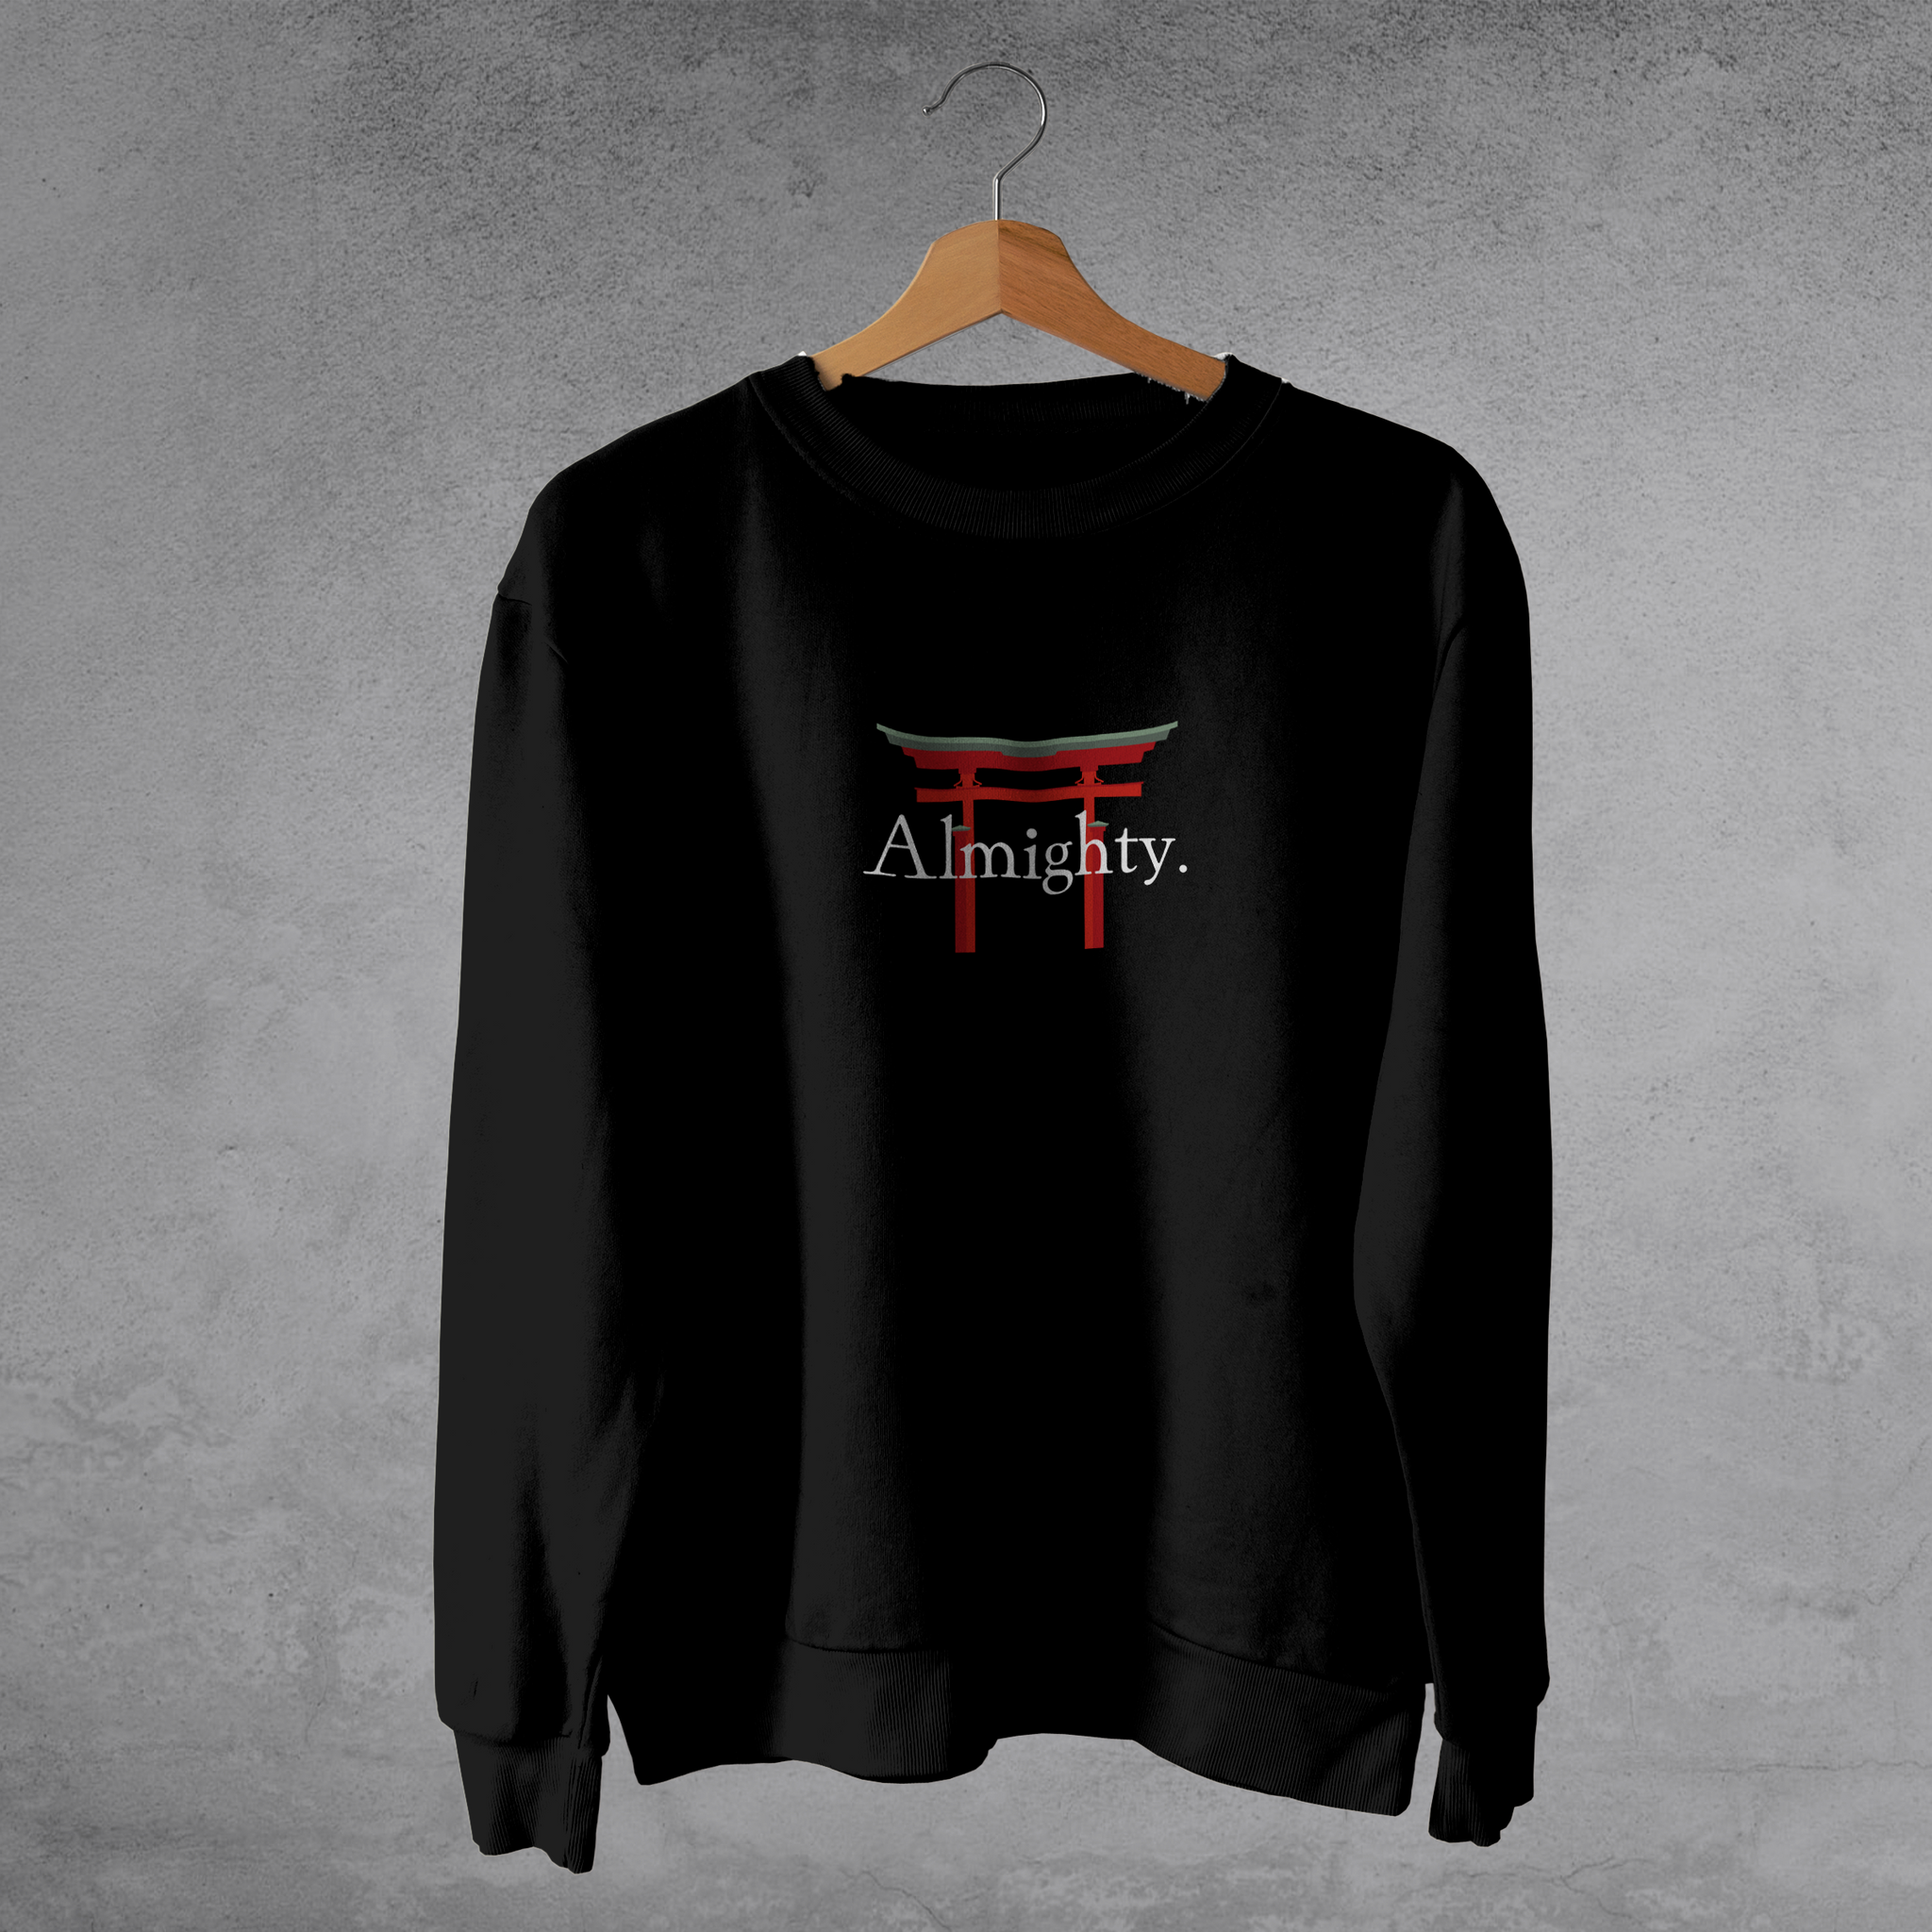 Almighty Torii Edition - Sweatshirt